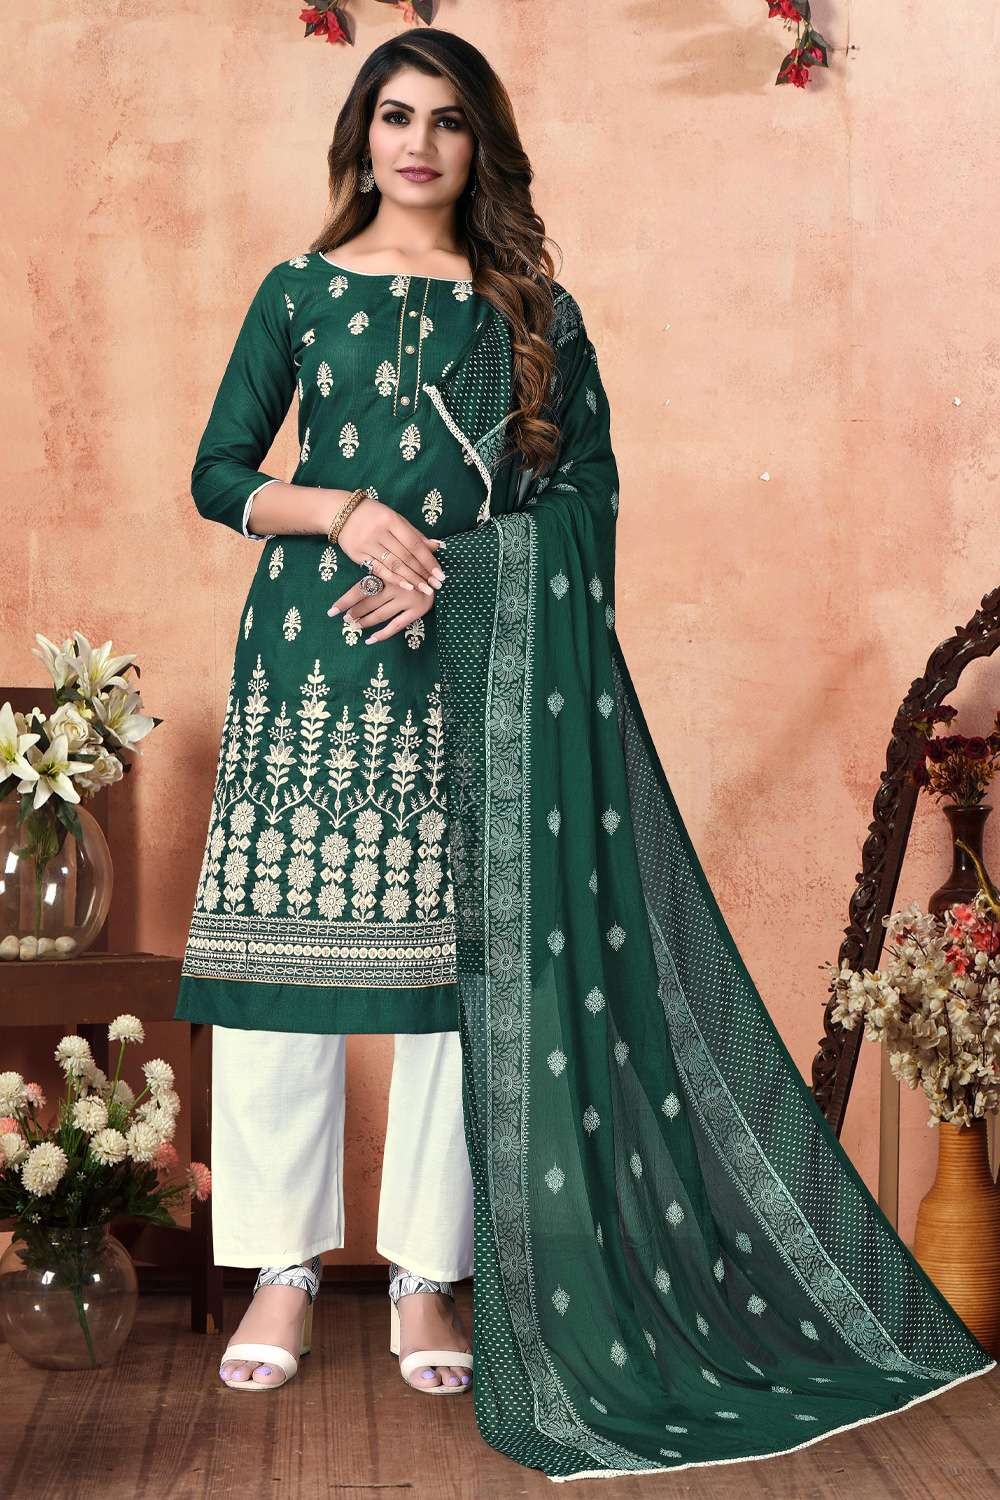 PAKISTANI DESIGNER PARTY Wear Embroidery Bottle Green Salwar Kameez Bridal  M $119.99 - PicClick